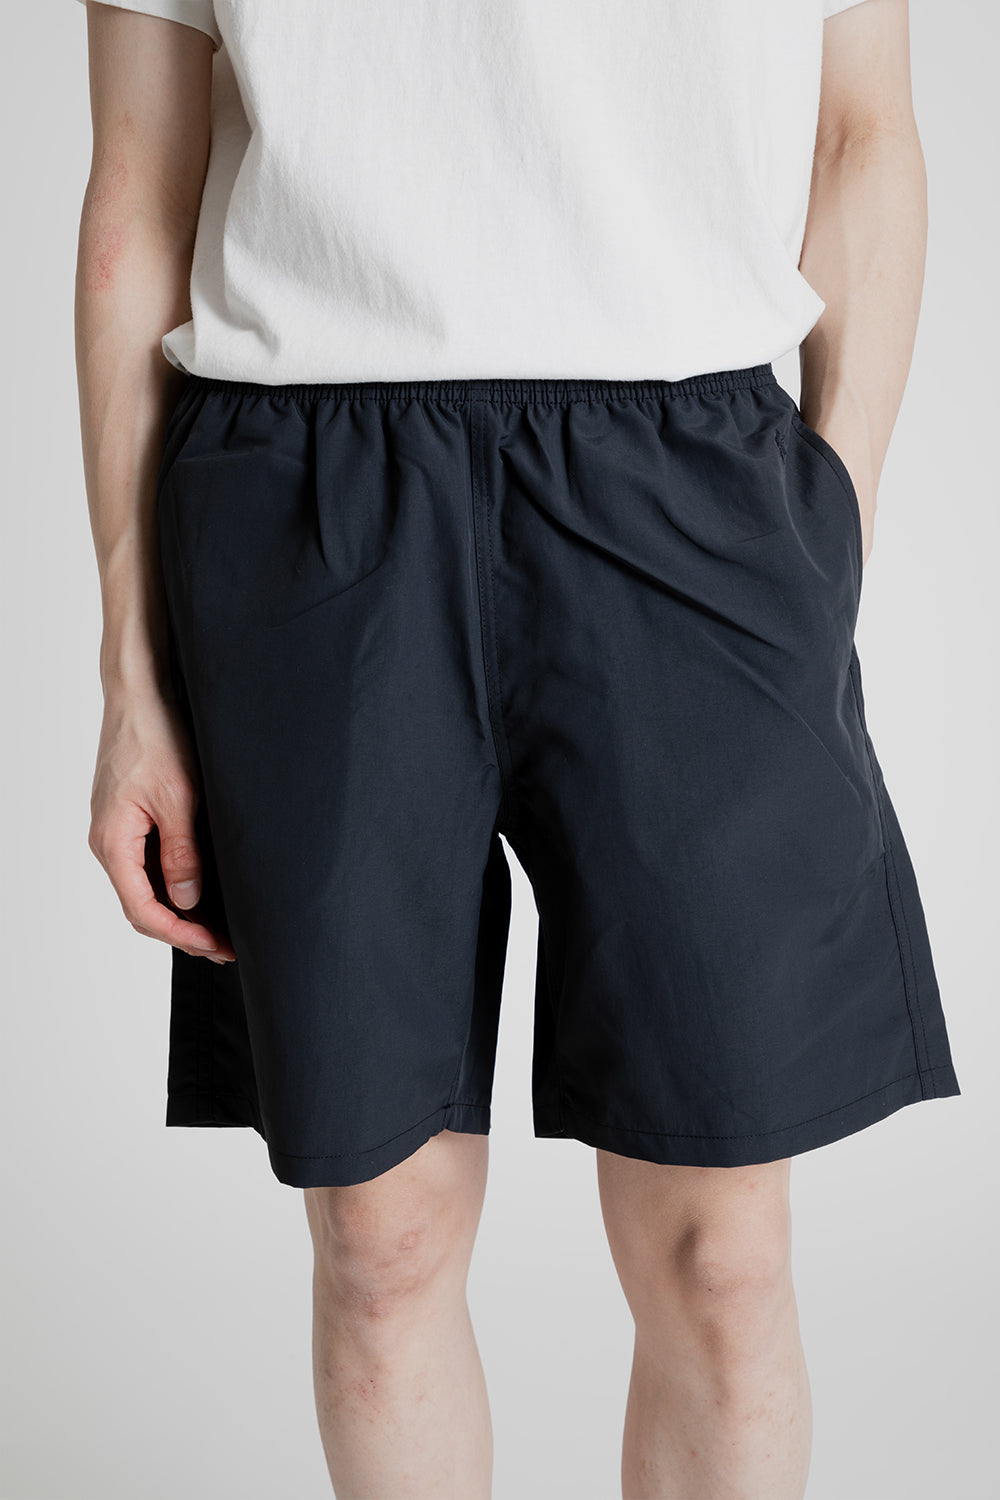 Goldwin Nylon Shorts 7 inch in Black